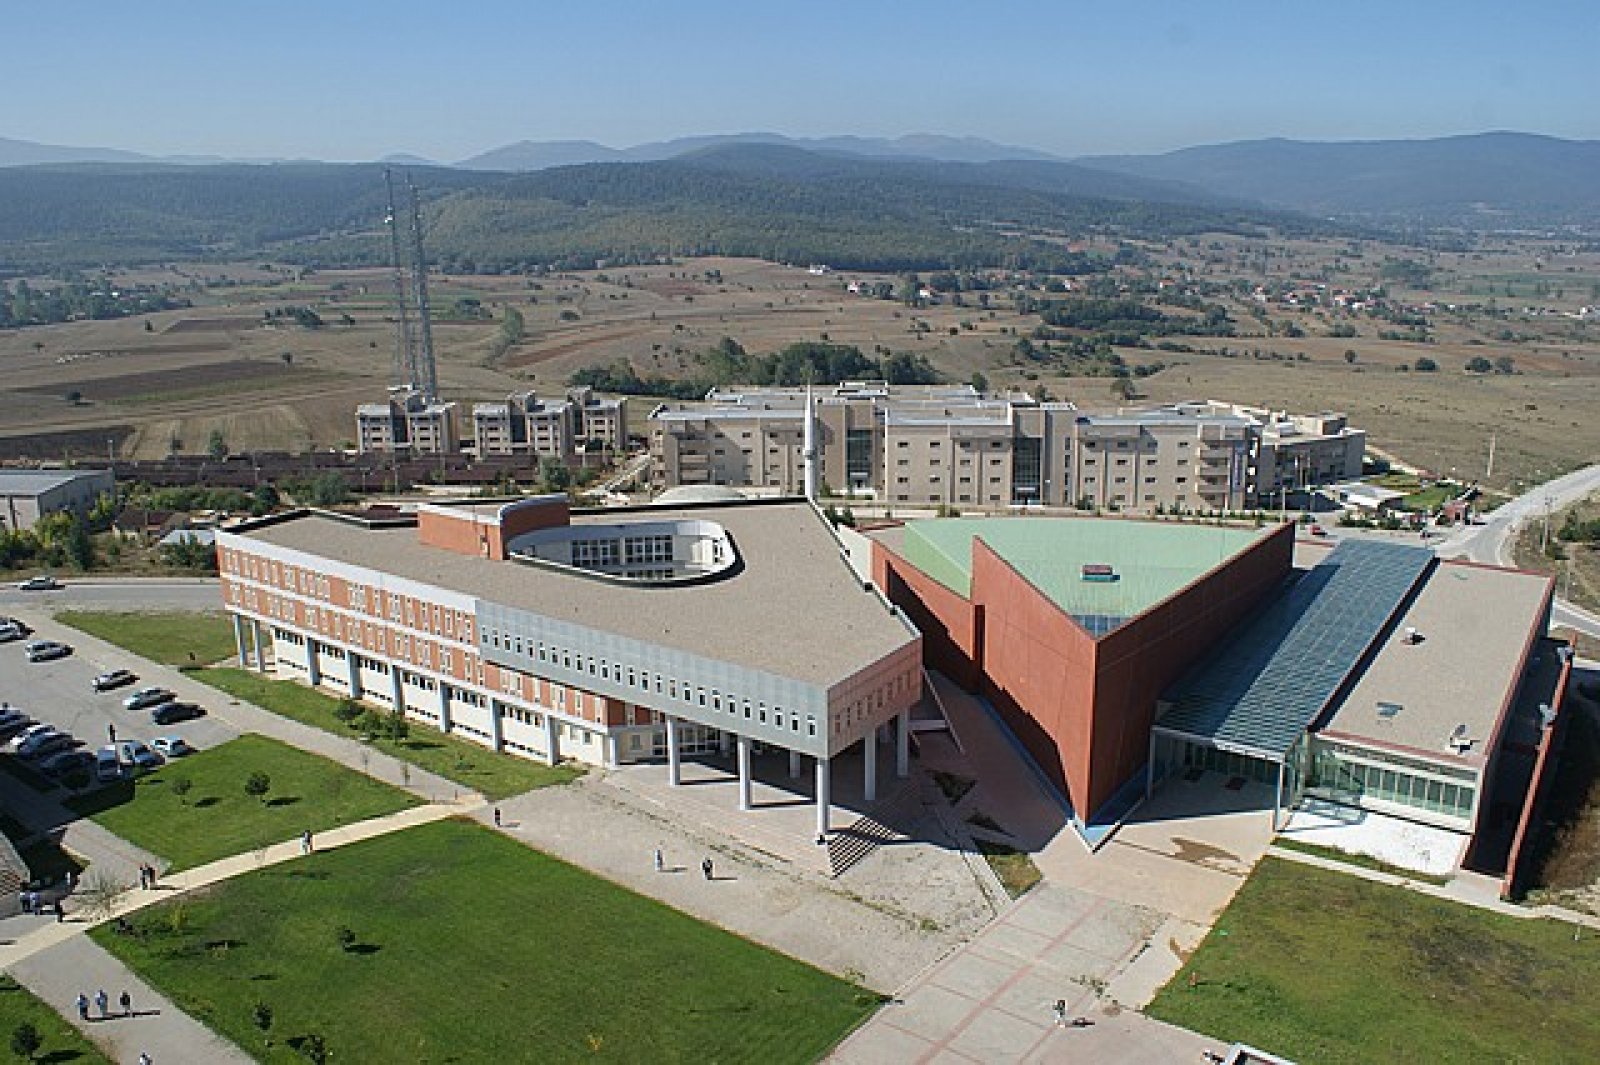 Izzet Baysal University